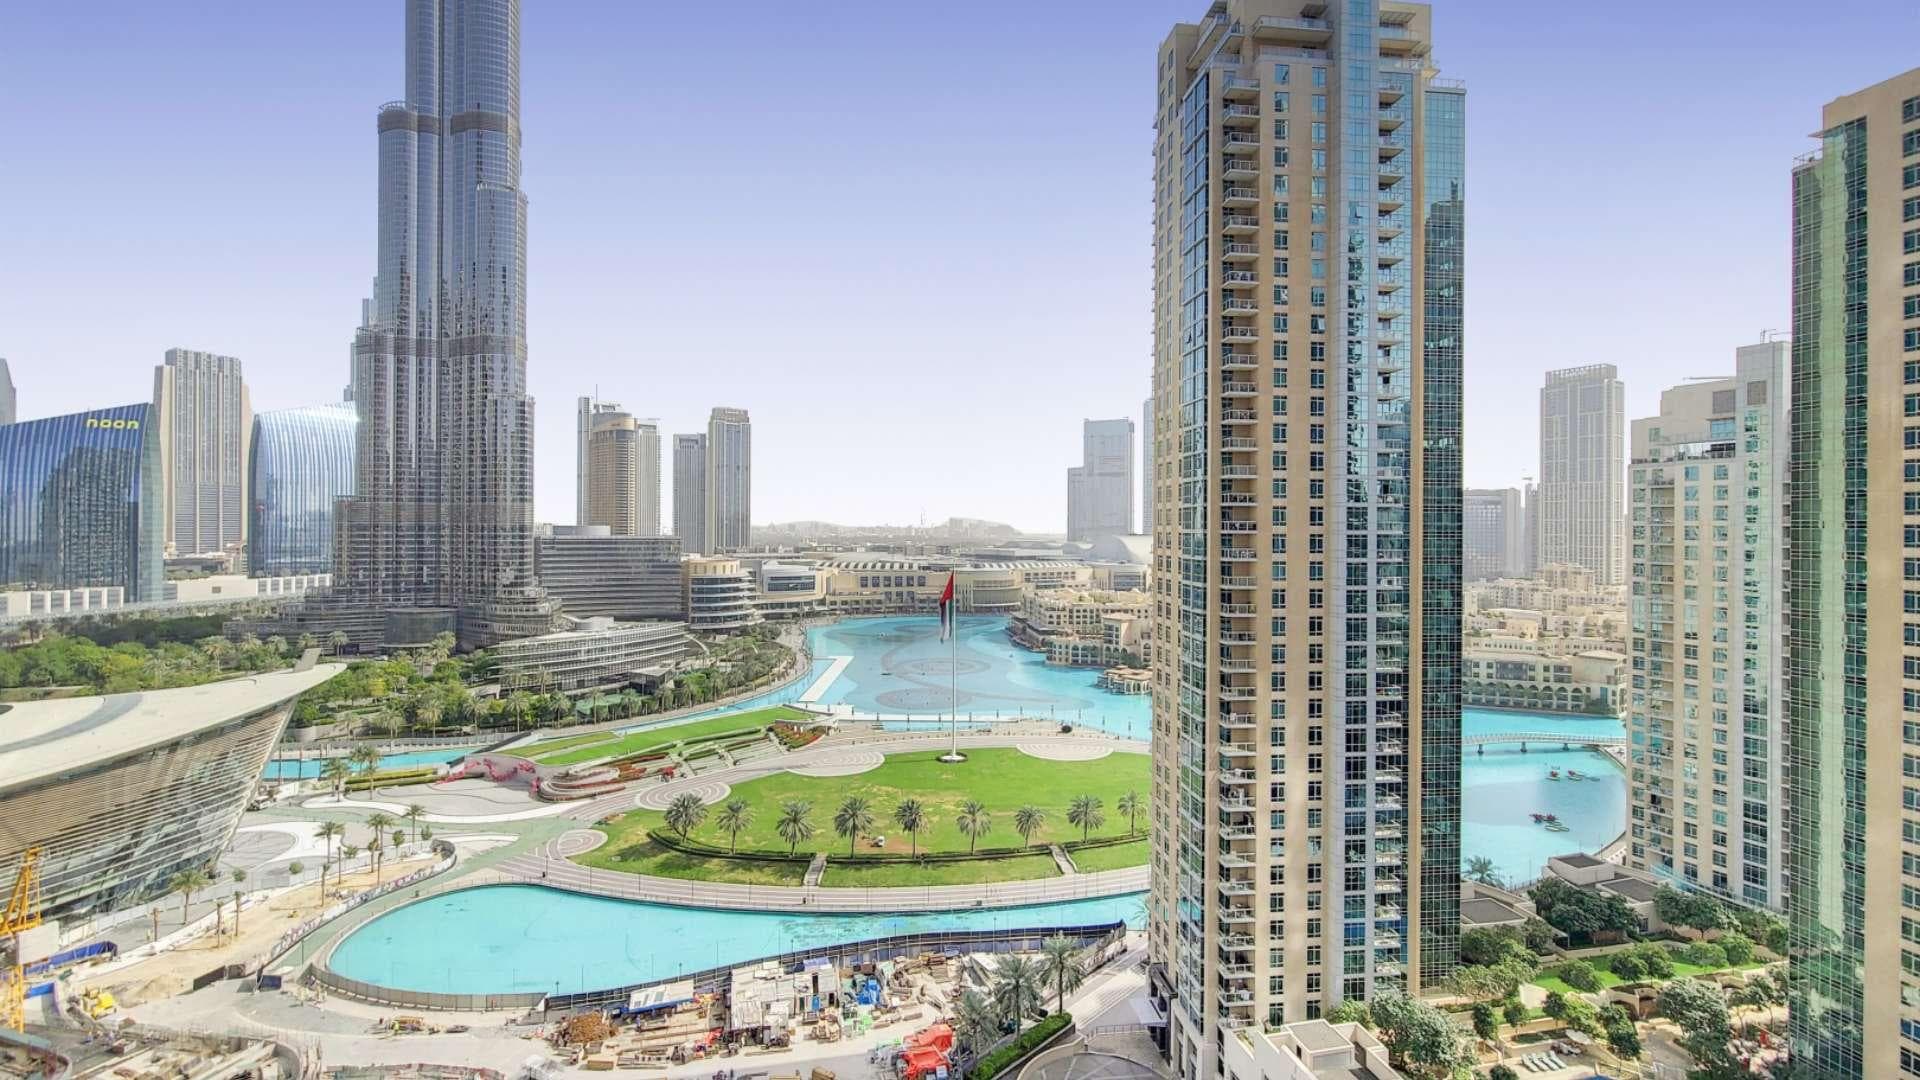 2 Bedroom Apartment For Sale Burj Khalifa Area Lp36587 1571ef6462a5da00.jpg